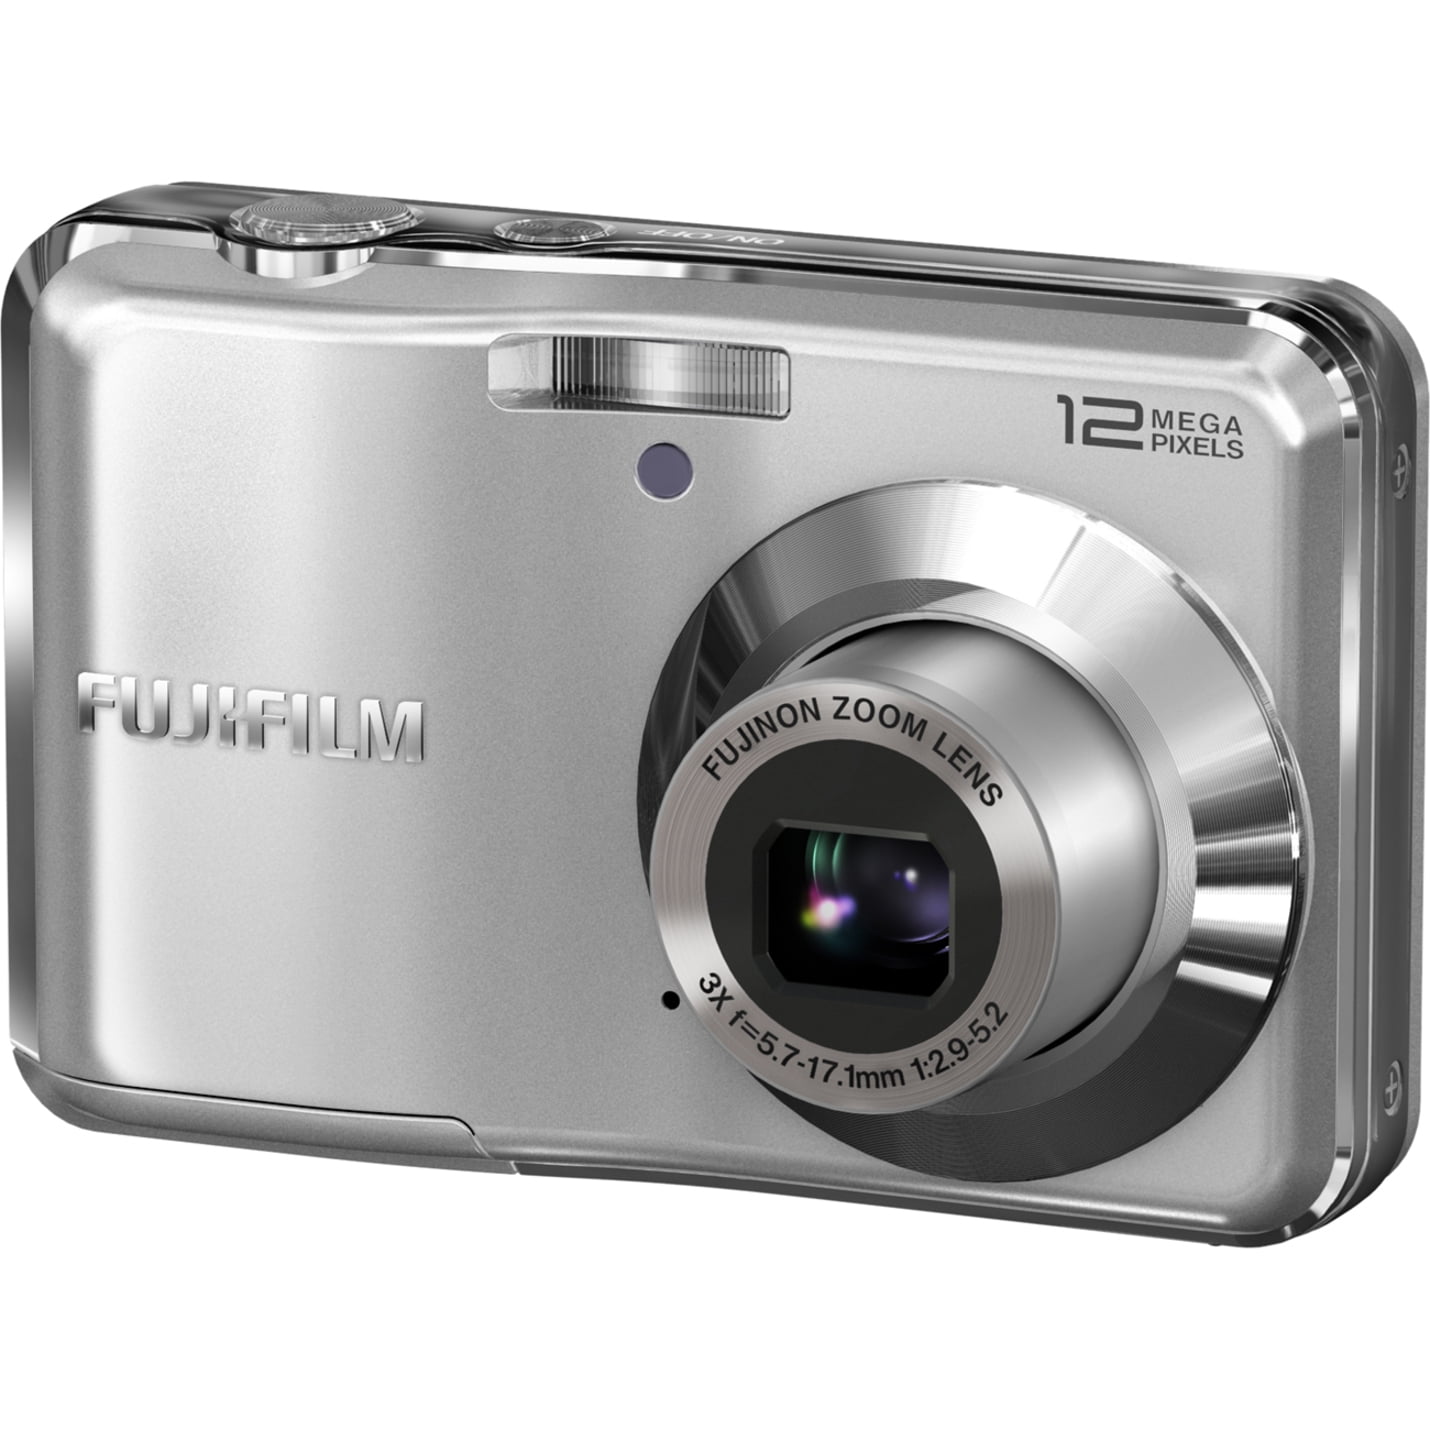 Bot voorspelling Buitenboordmotor Fujifilm FinePix AV100 12.2 Megapixel Compact Camera, Silver - Walmart.com